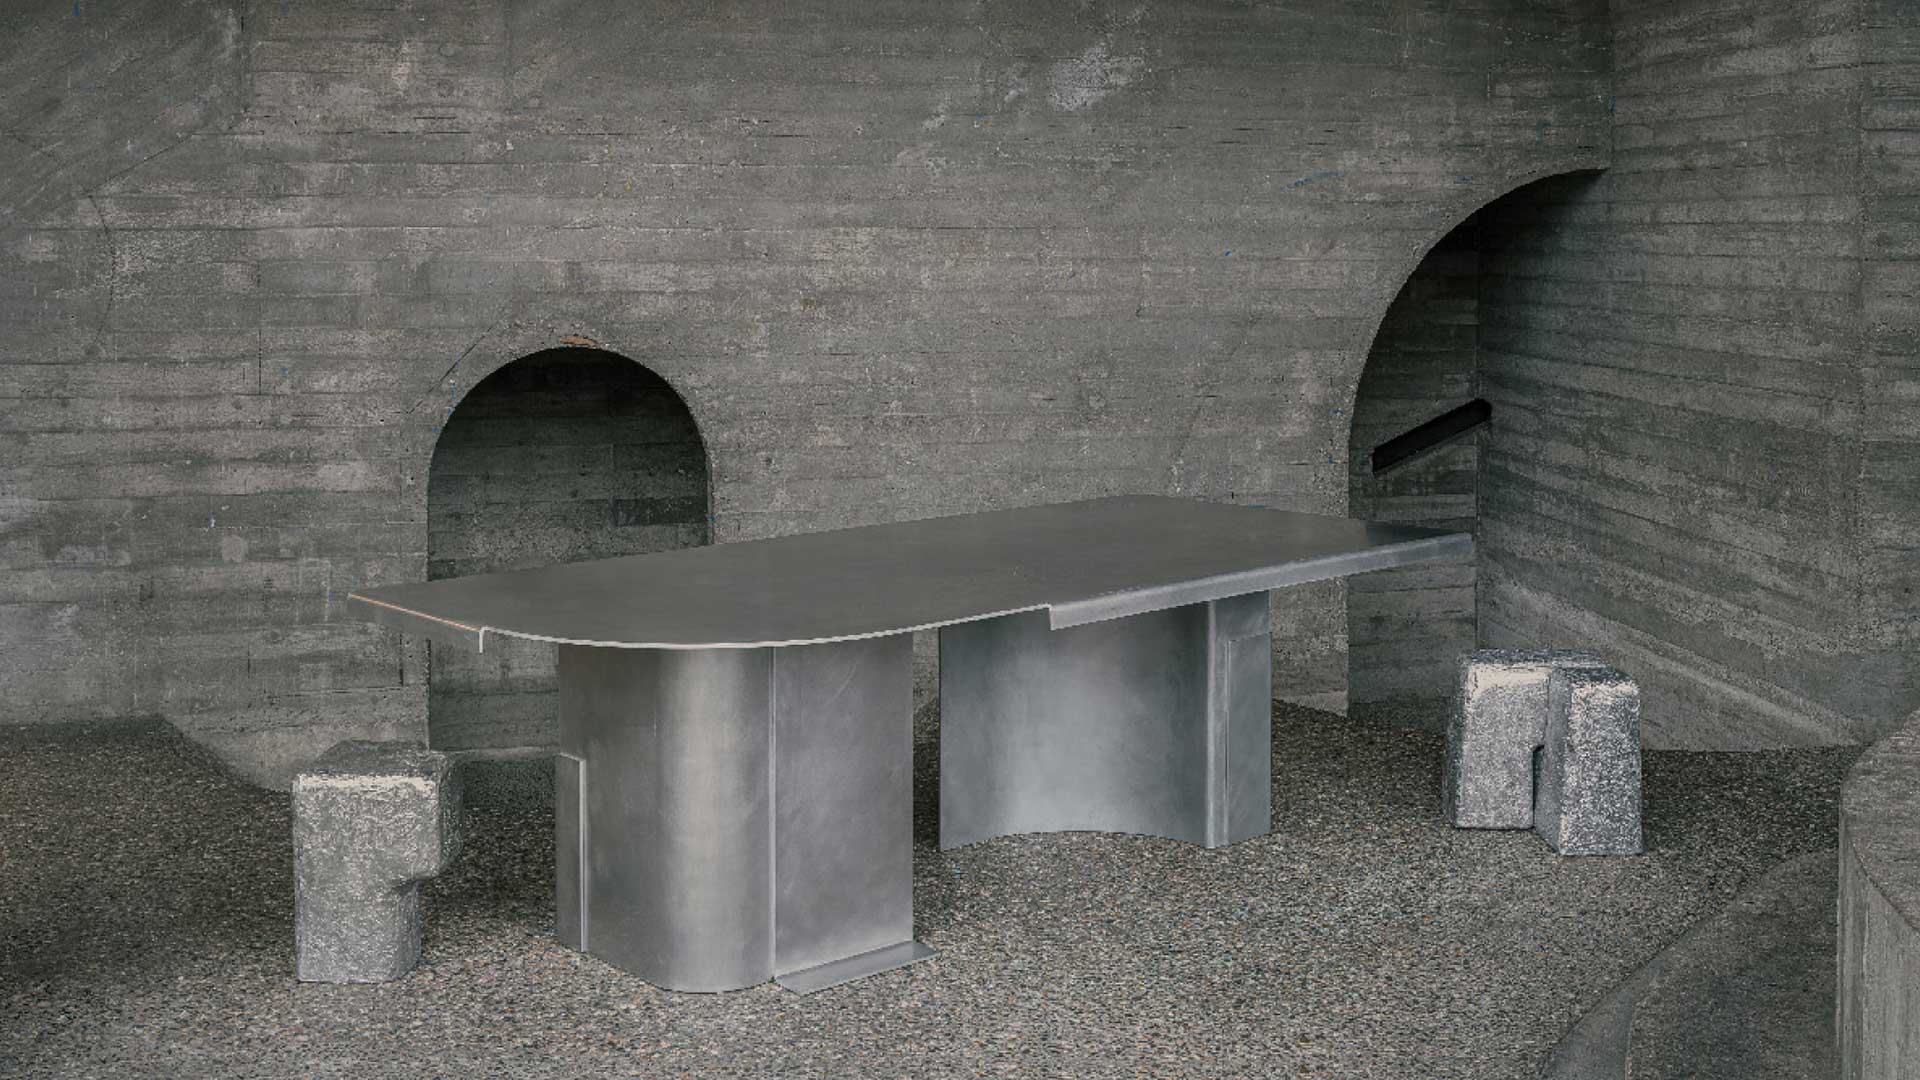 The Dining Table by Linda Freya Tangelder for Carwan Gallery